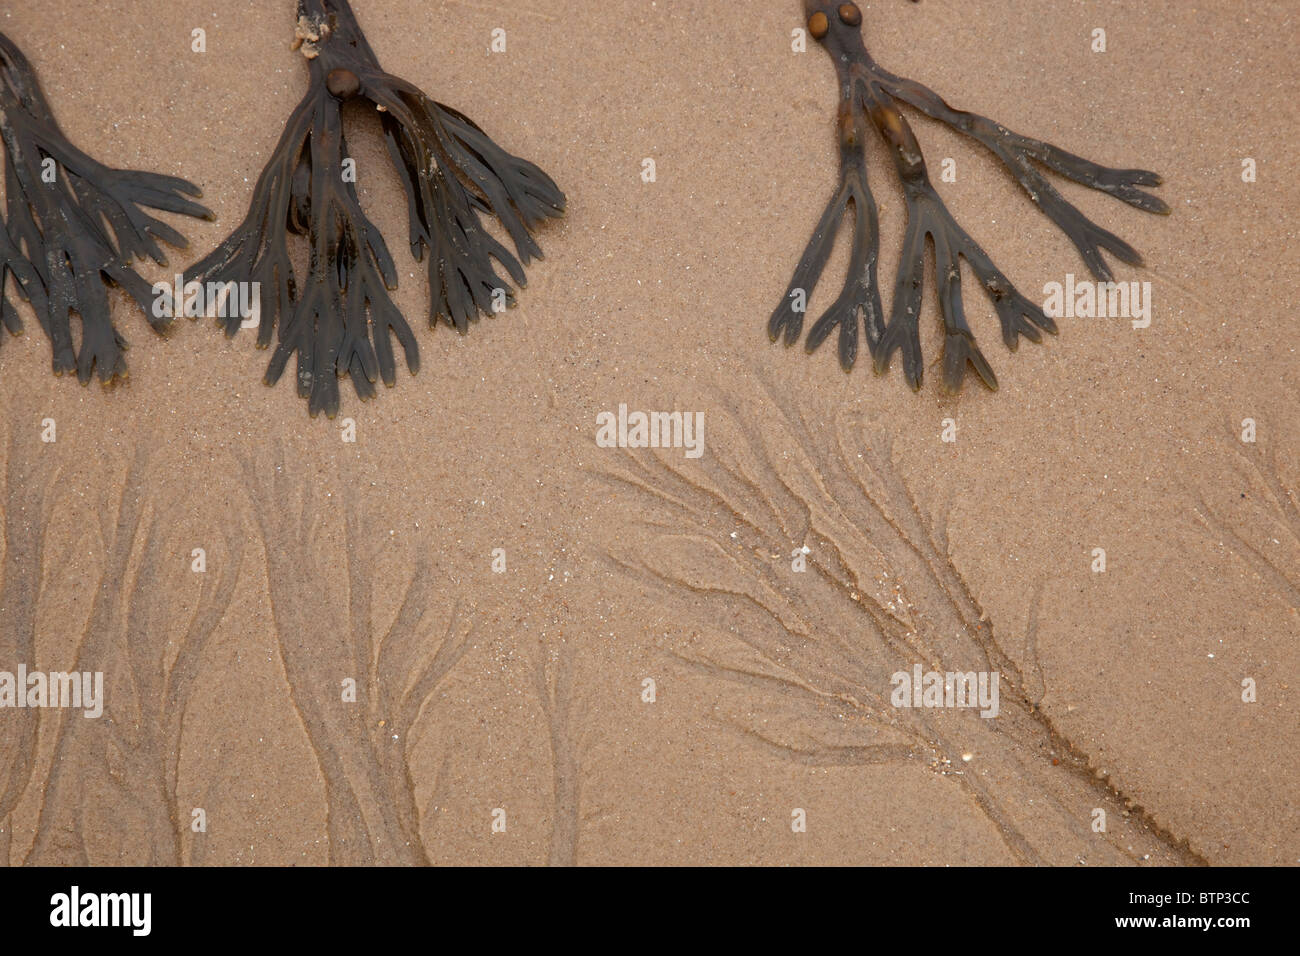 Bladder wrack Fucus vesiculosus and sand patterns Stock Photo